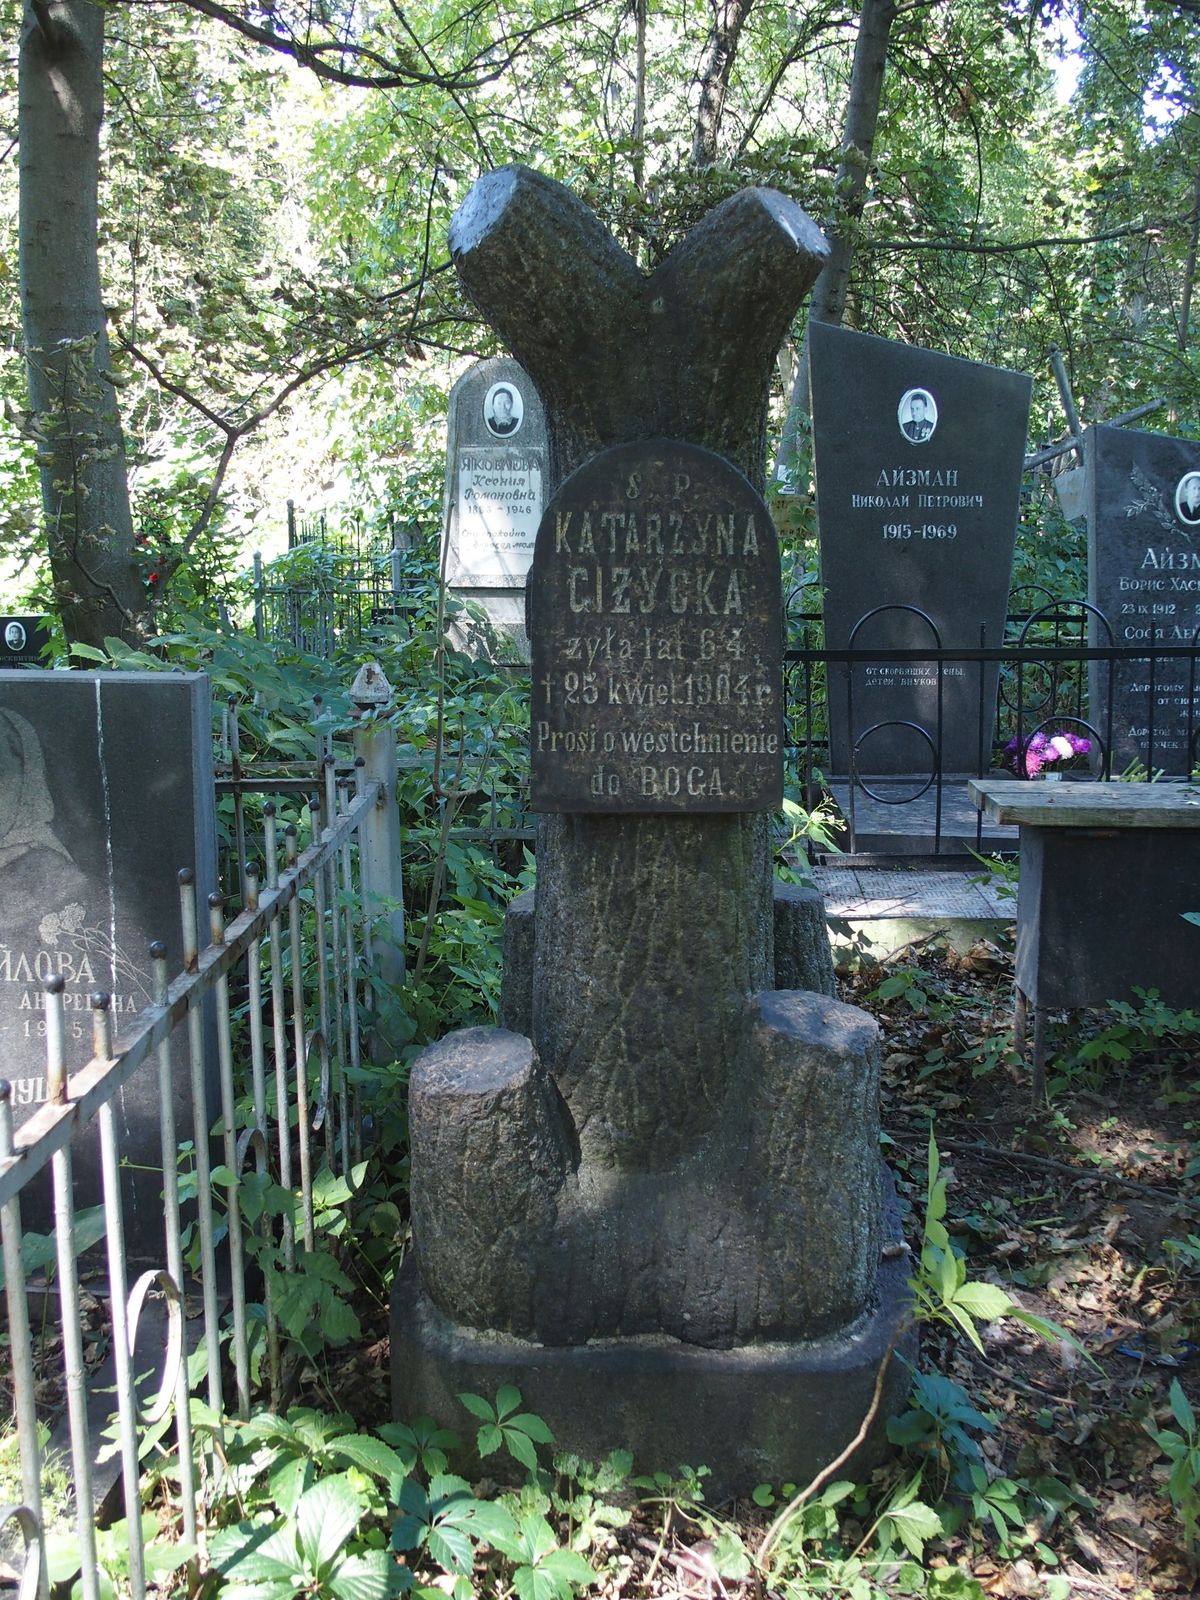 Tombstone of Catherine Gizycka